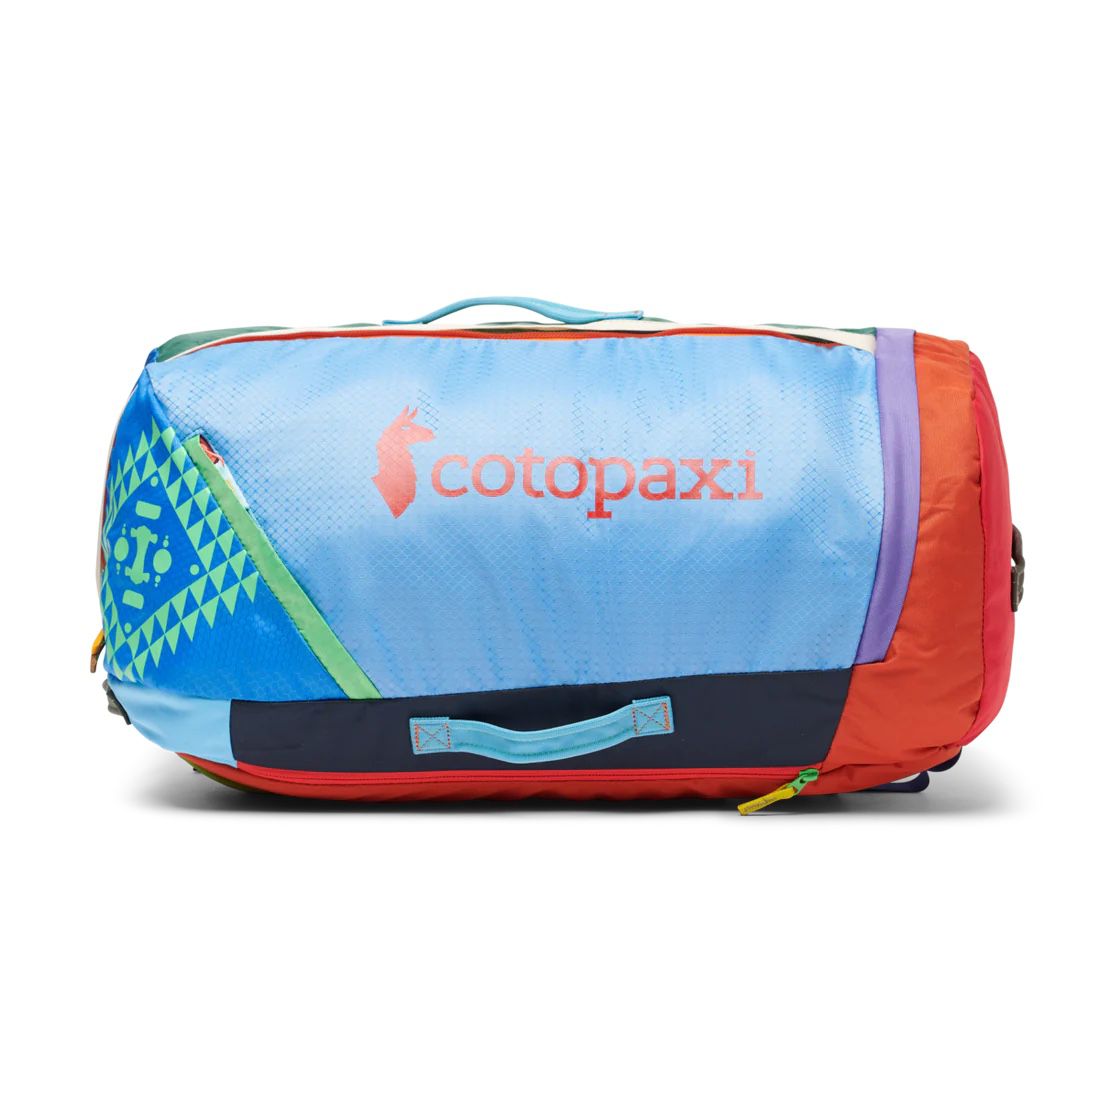 Cotopaxi Uyuni 46l Adventure Duffel Bag Del Dia for Sale in San Antonio ...